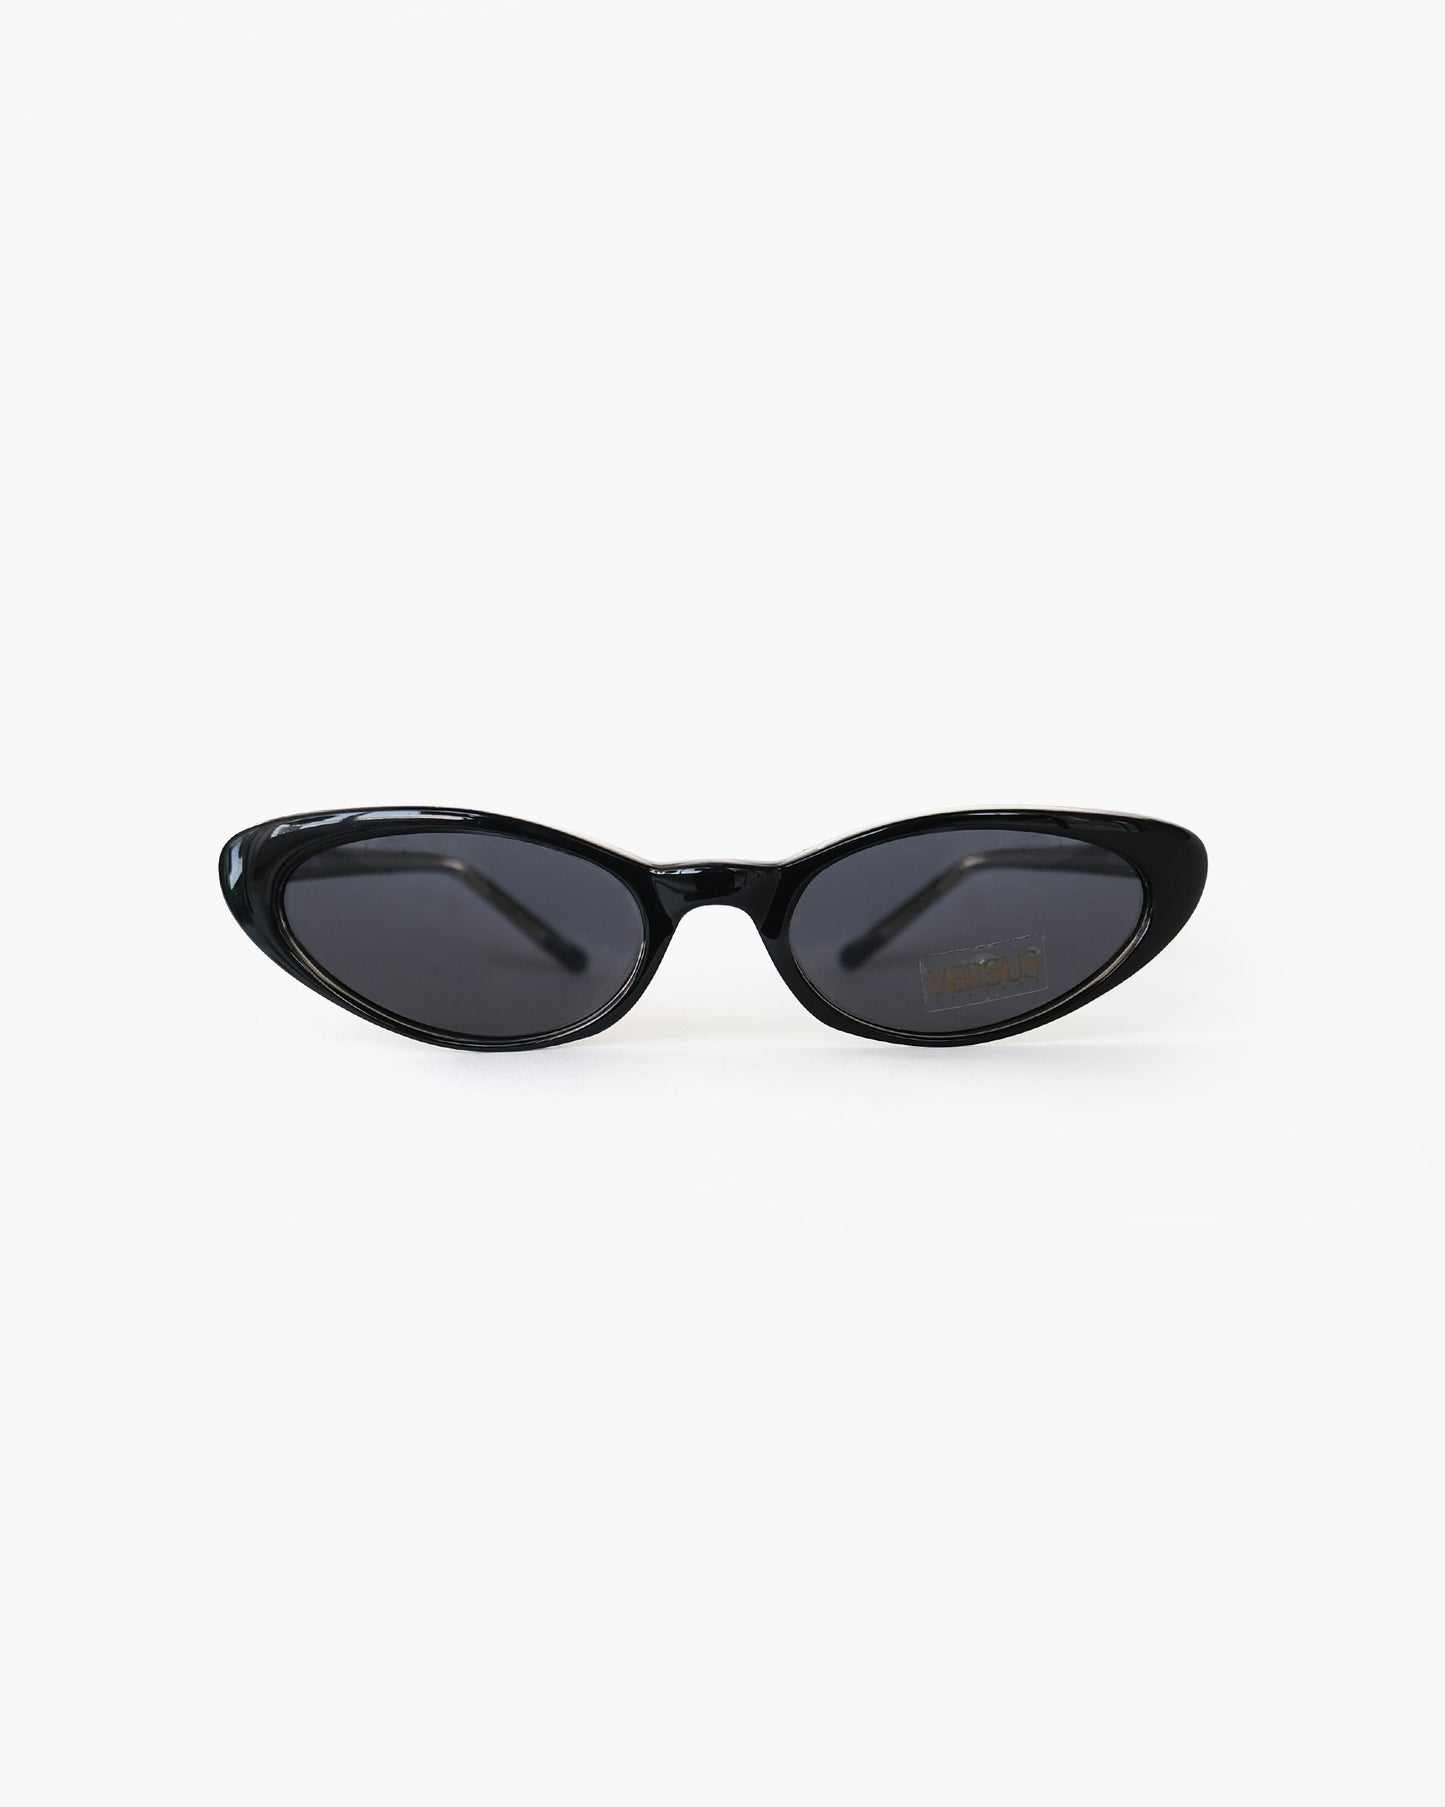 NOS "Versace"  Cats Eye  Sunglasses